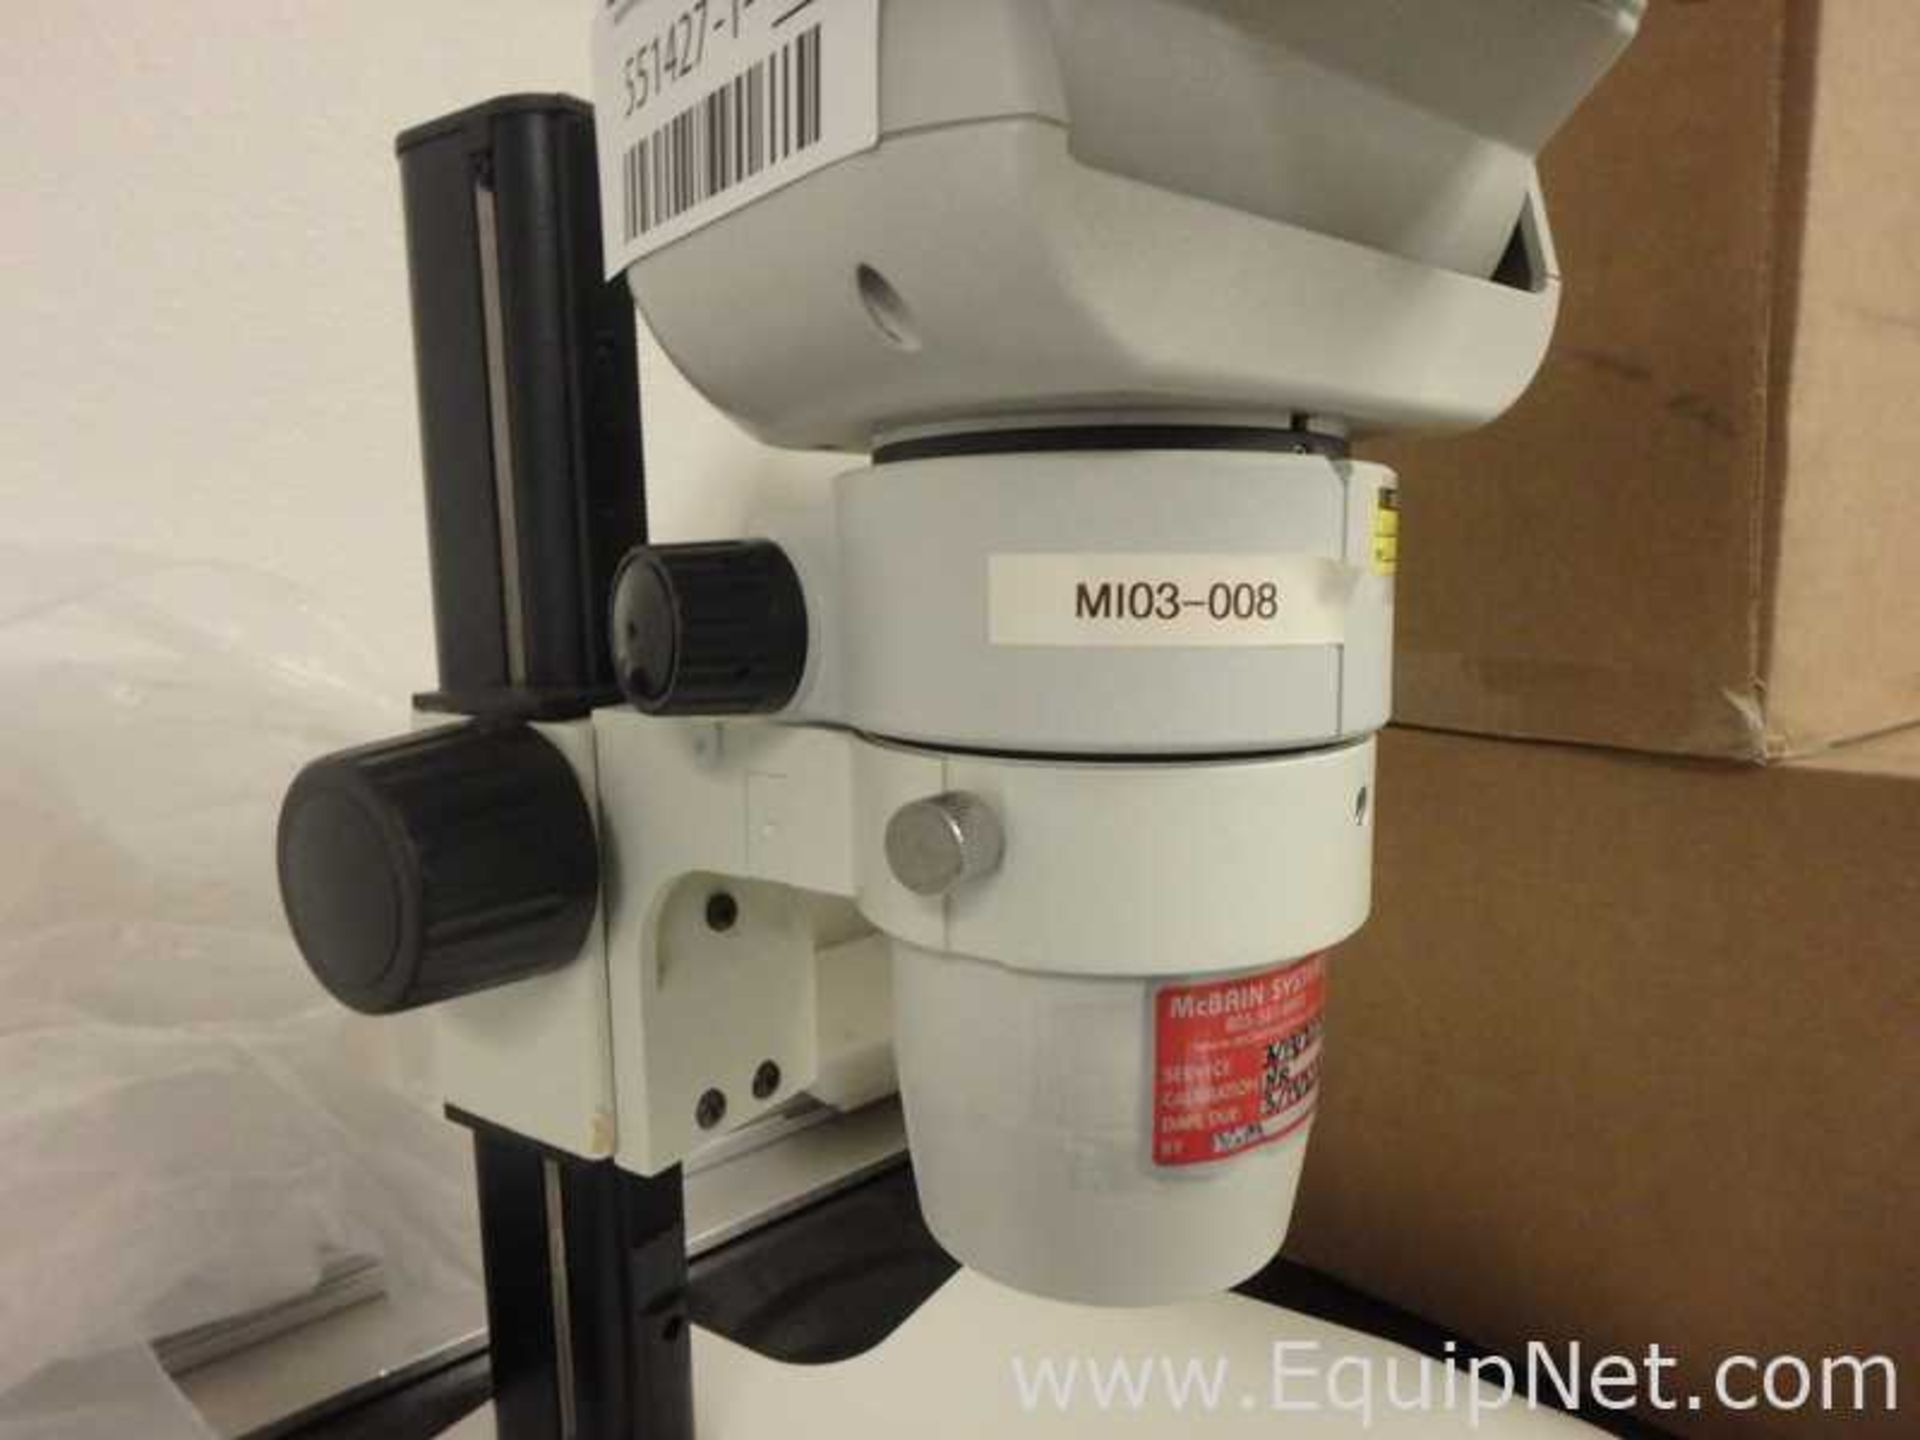 McBain Microscope - Image 3 of 4